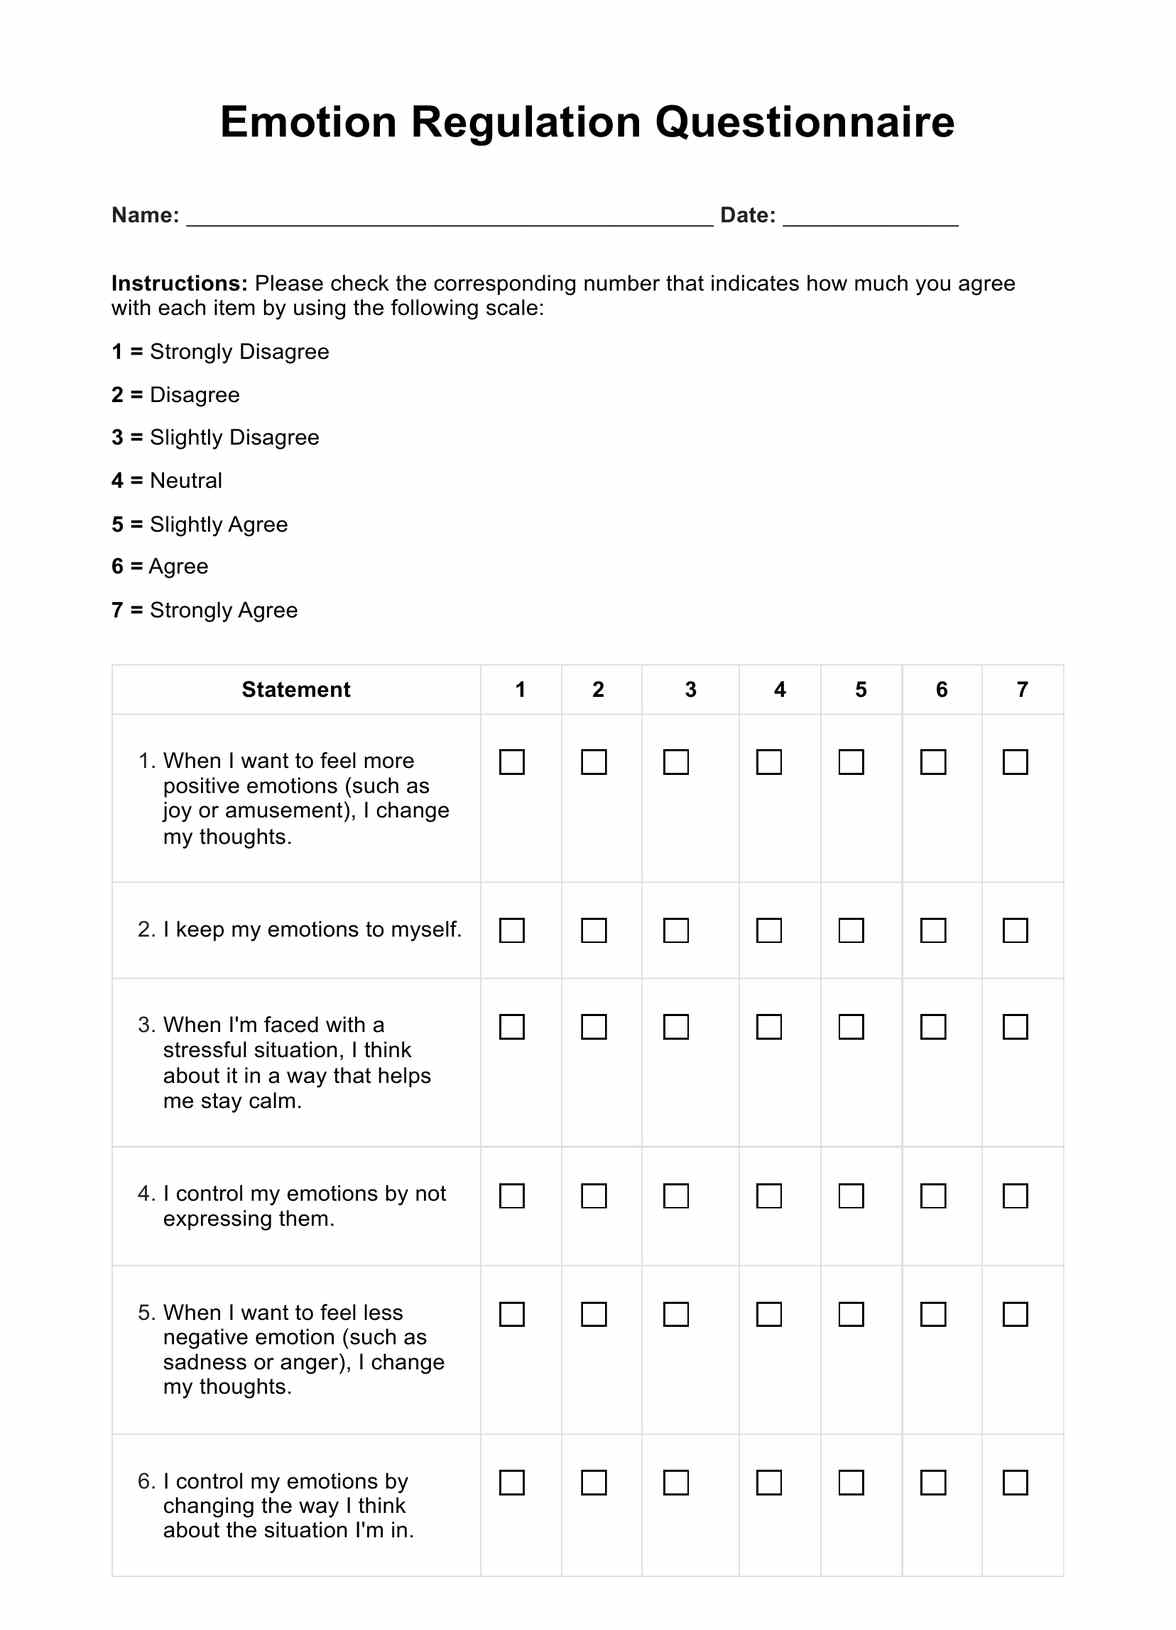 Emotion Regulation Questionnaire PDF Example